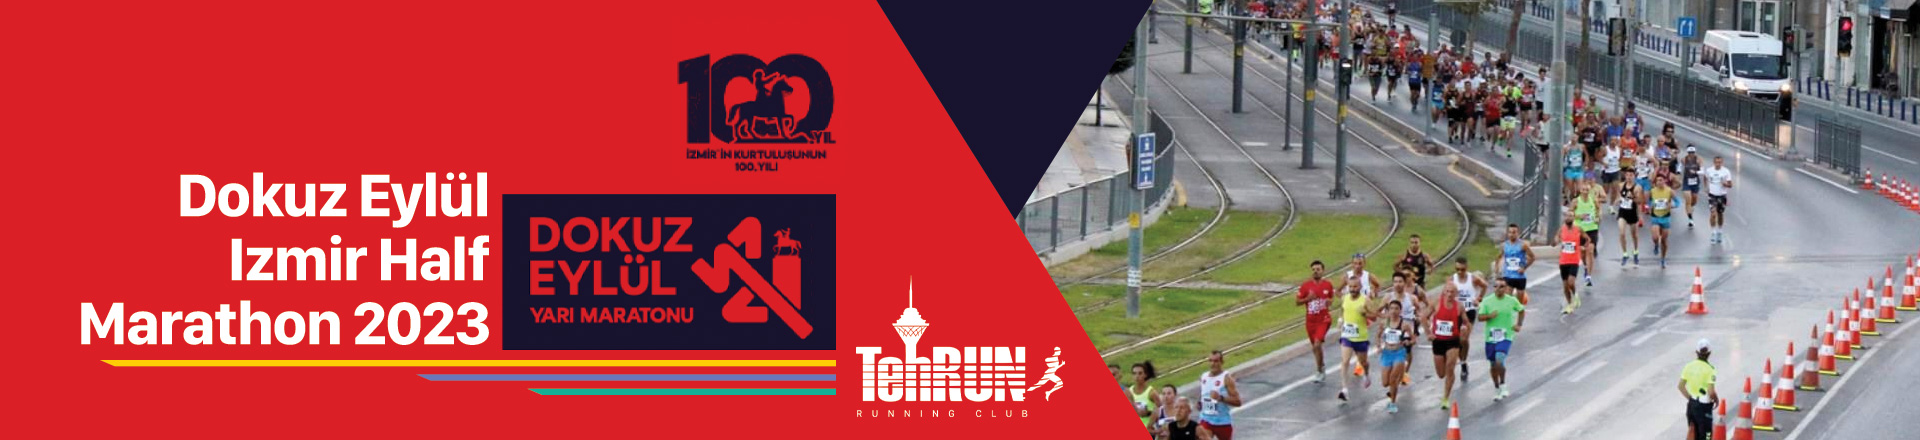 Dokuz-Eylül-Izmir-Half-Marathon-header-Events